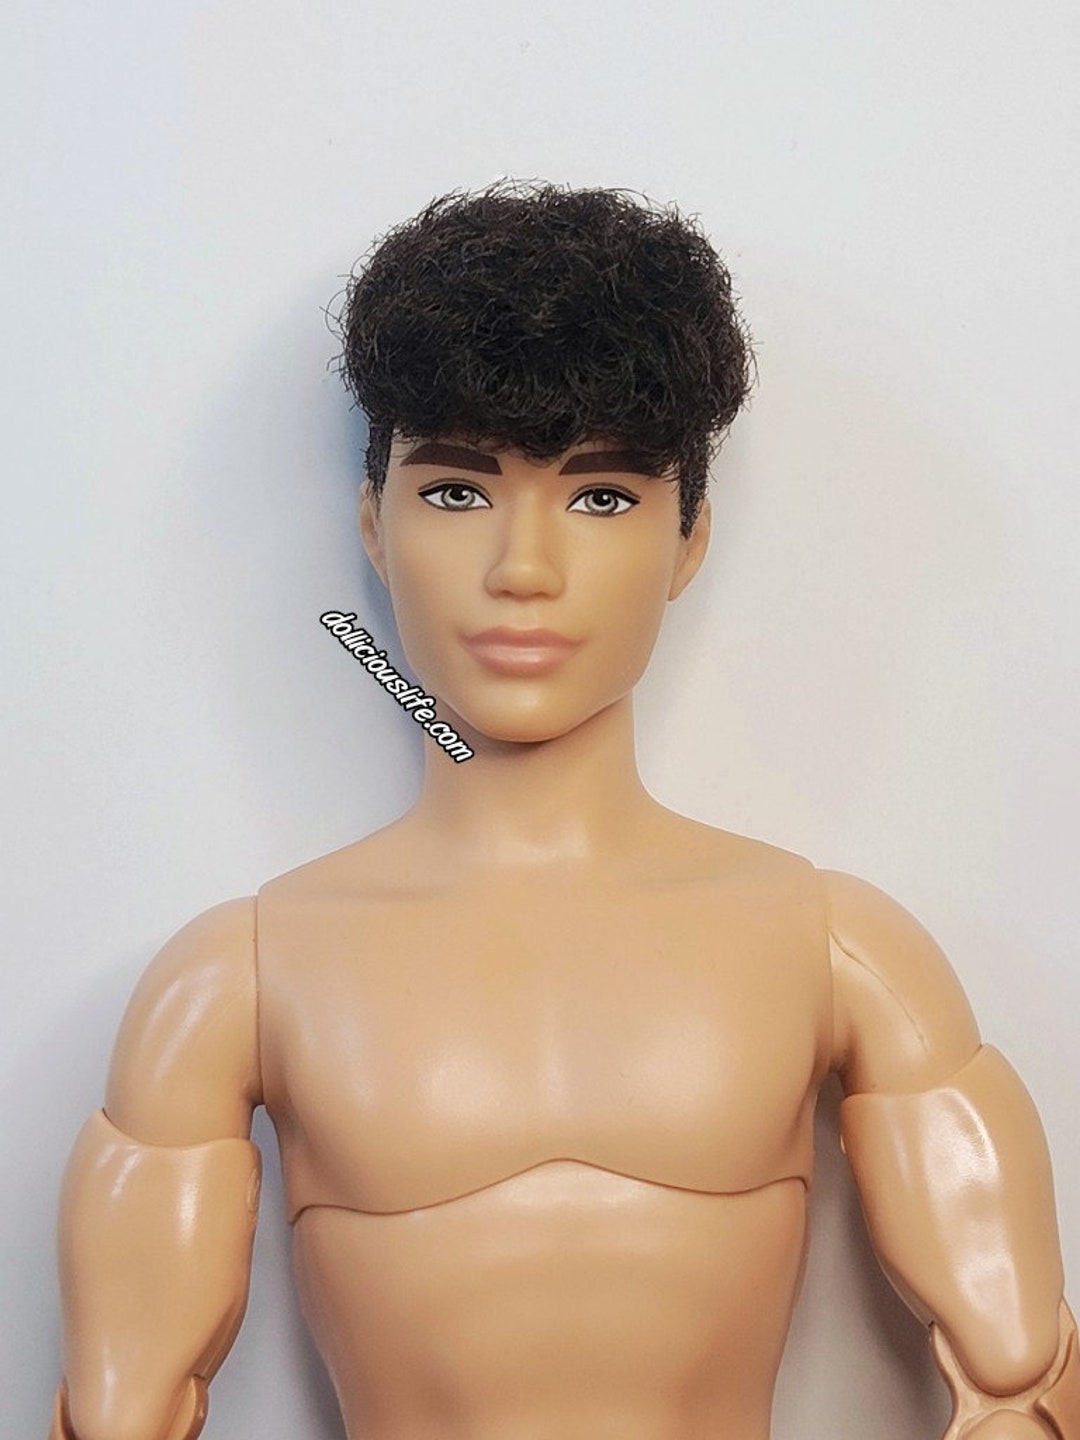 Ken Doll 184 Customized - Etsy Canada